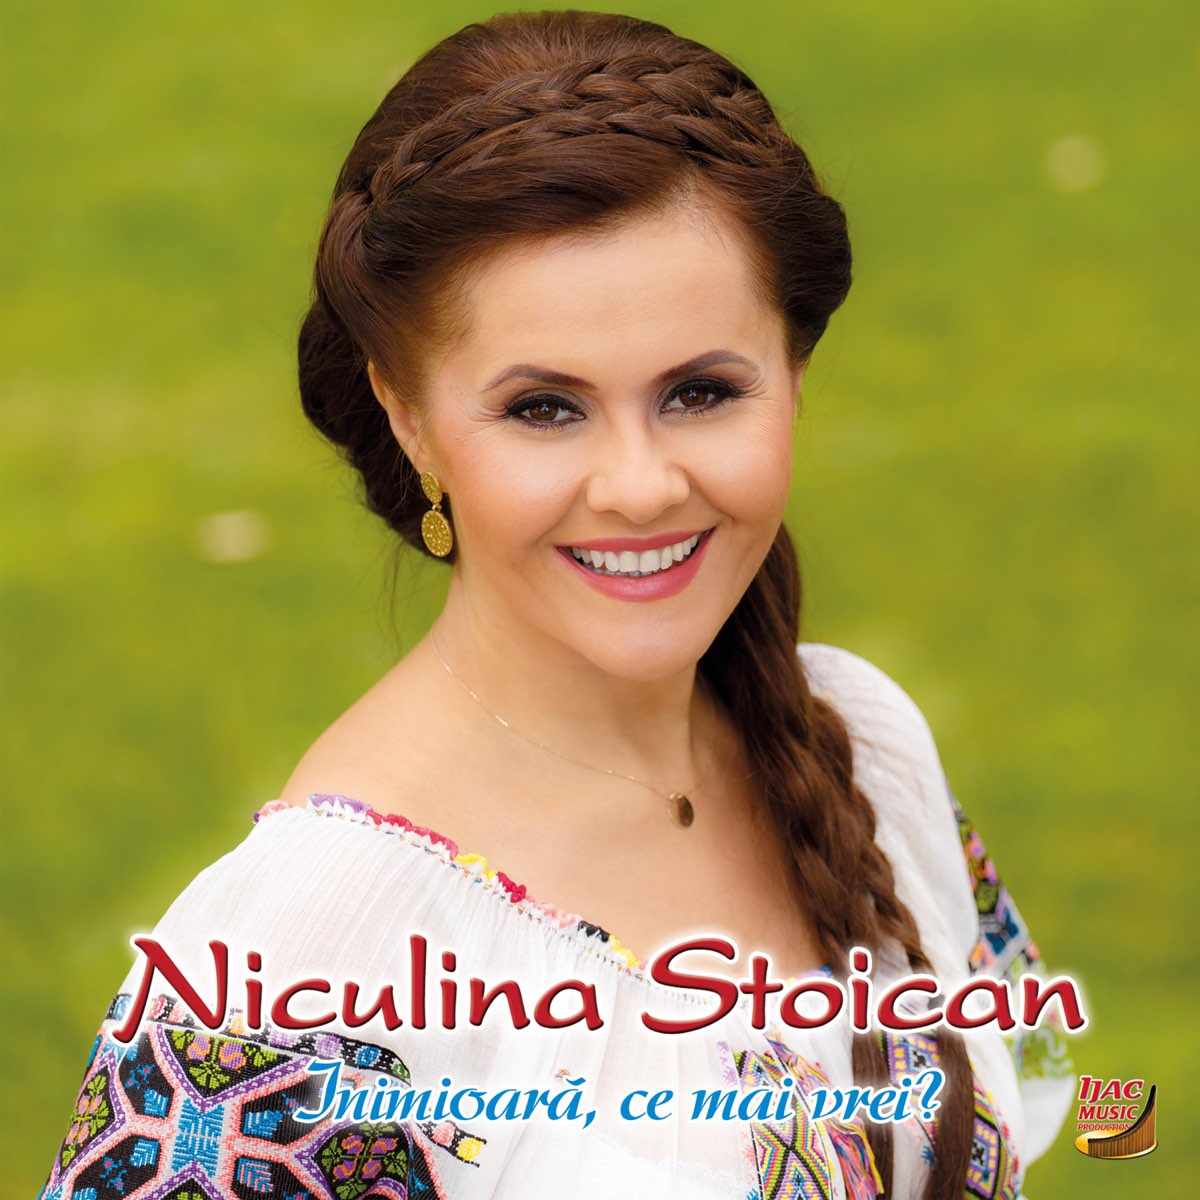 niculina stoican album 2012 download torrent file